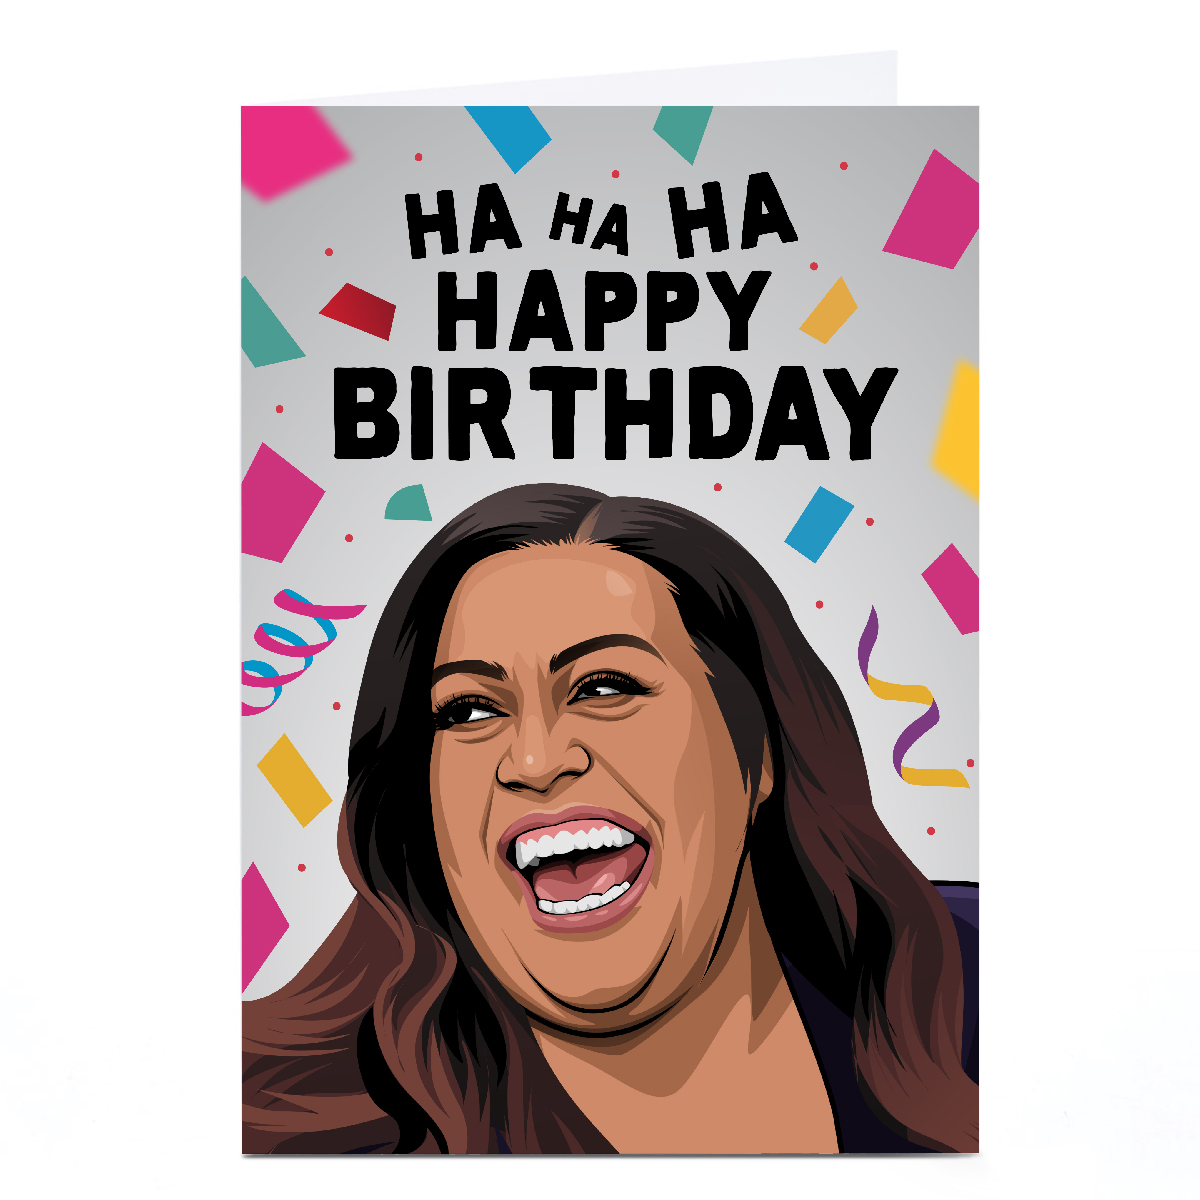 Personalised All Things Banter Birthday Card - Ha Ha Happy Birthday